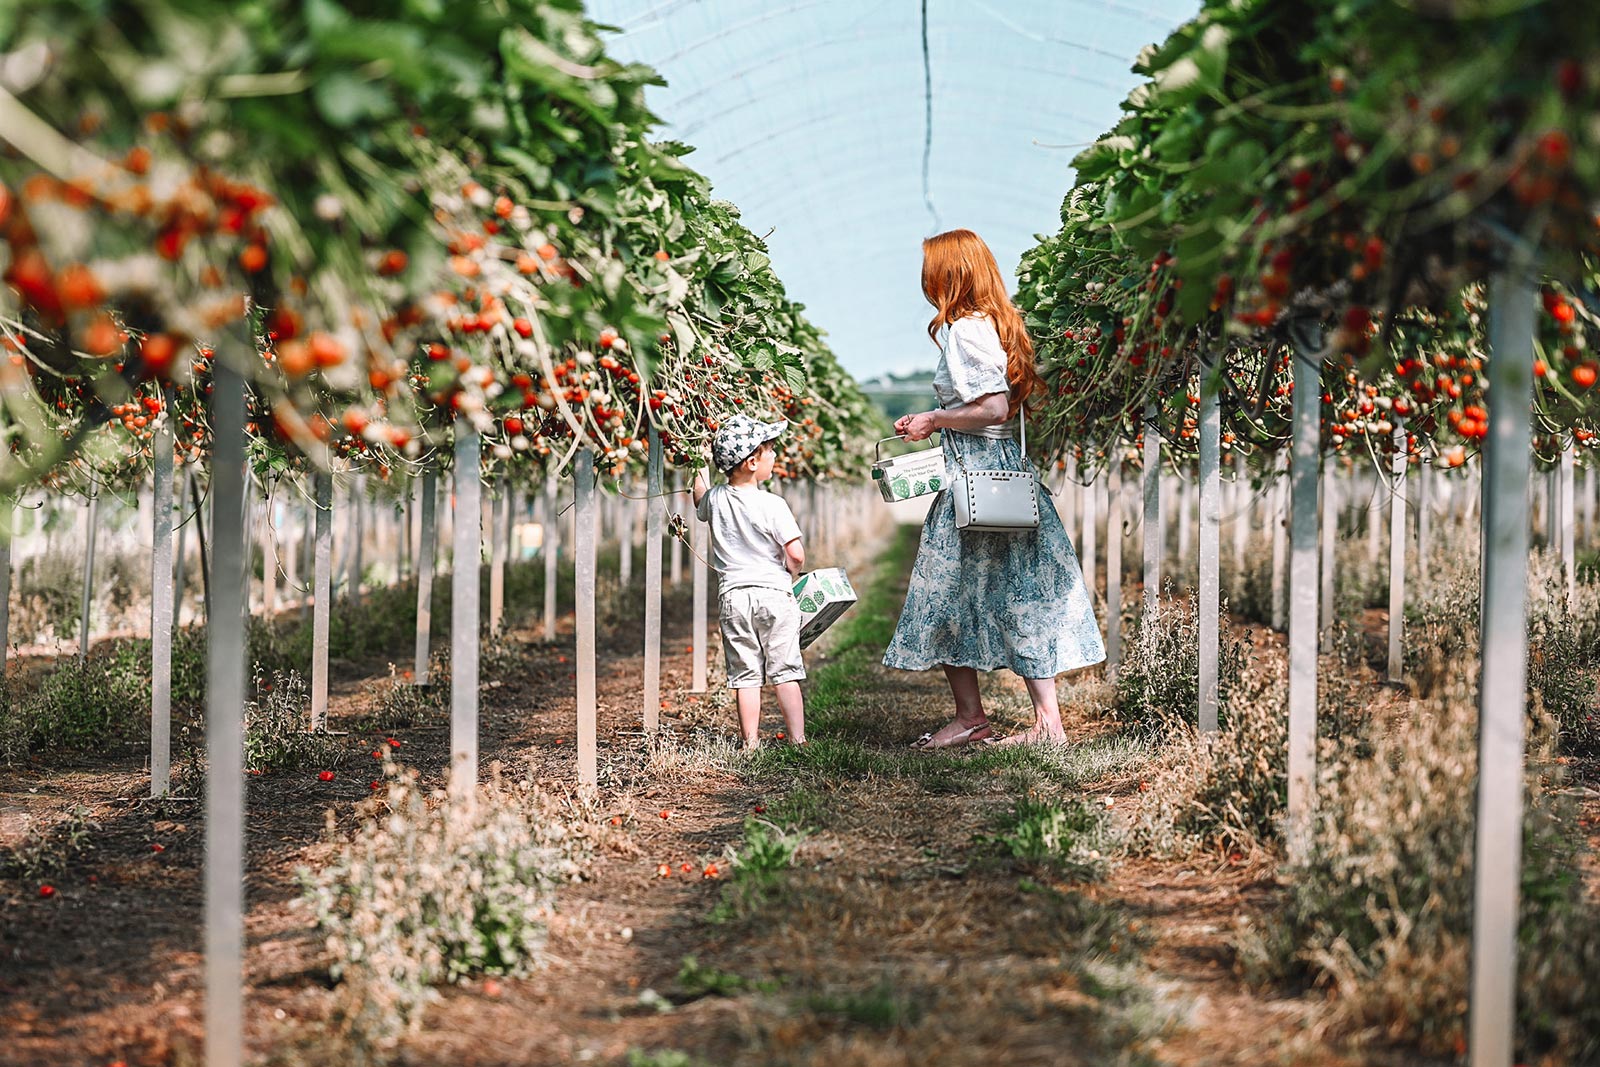 Amber and Max picking strawberries